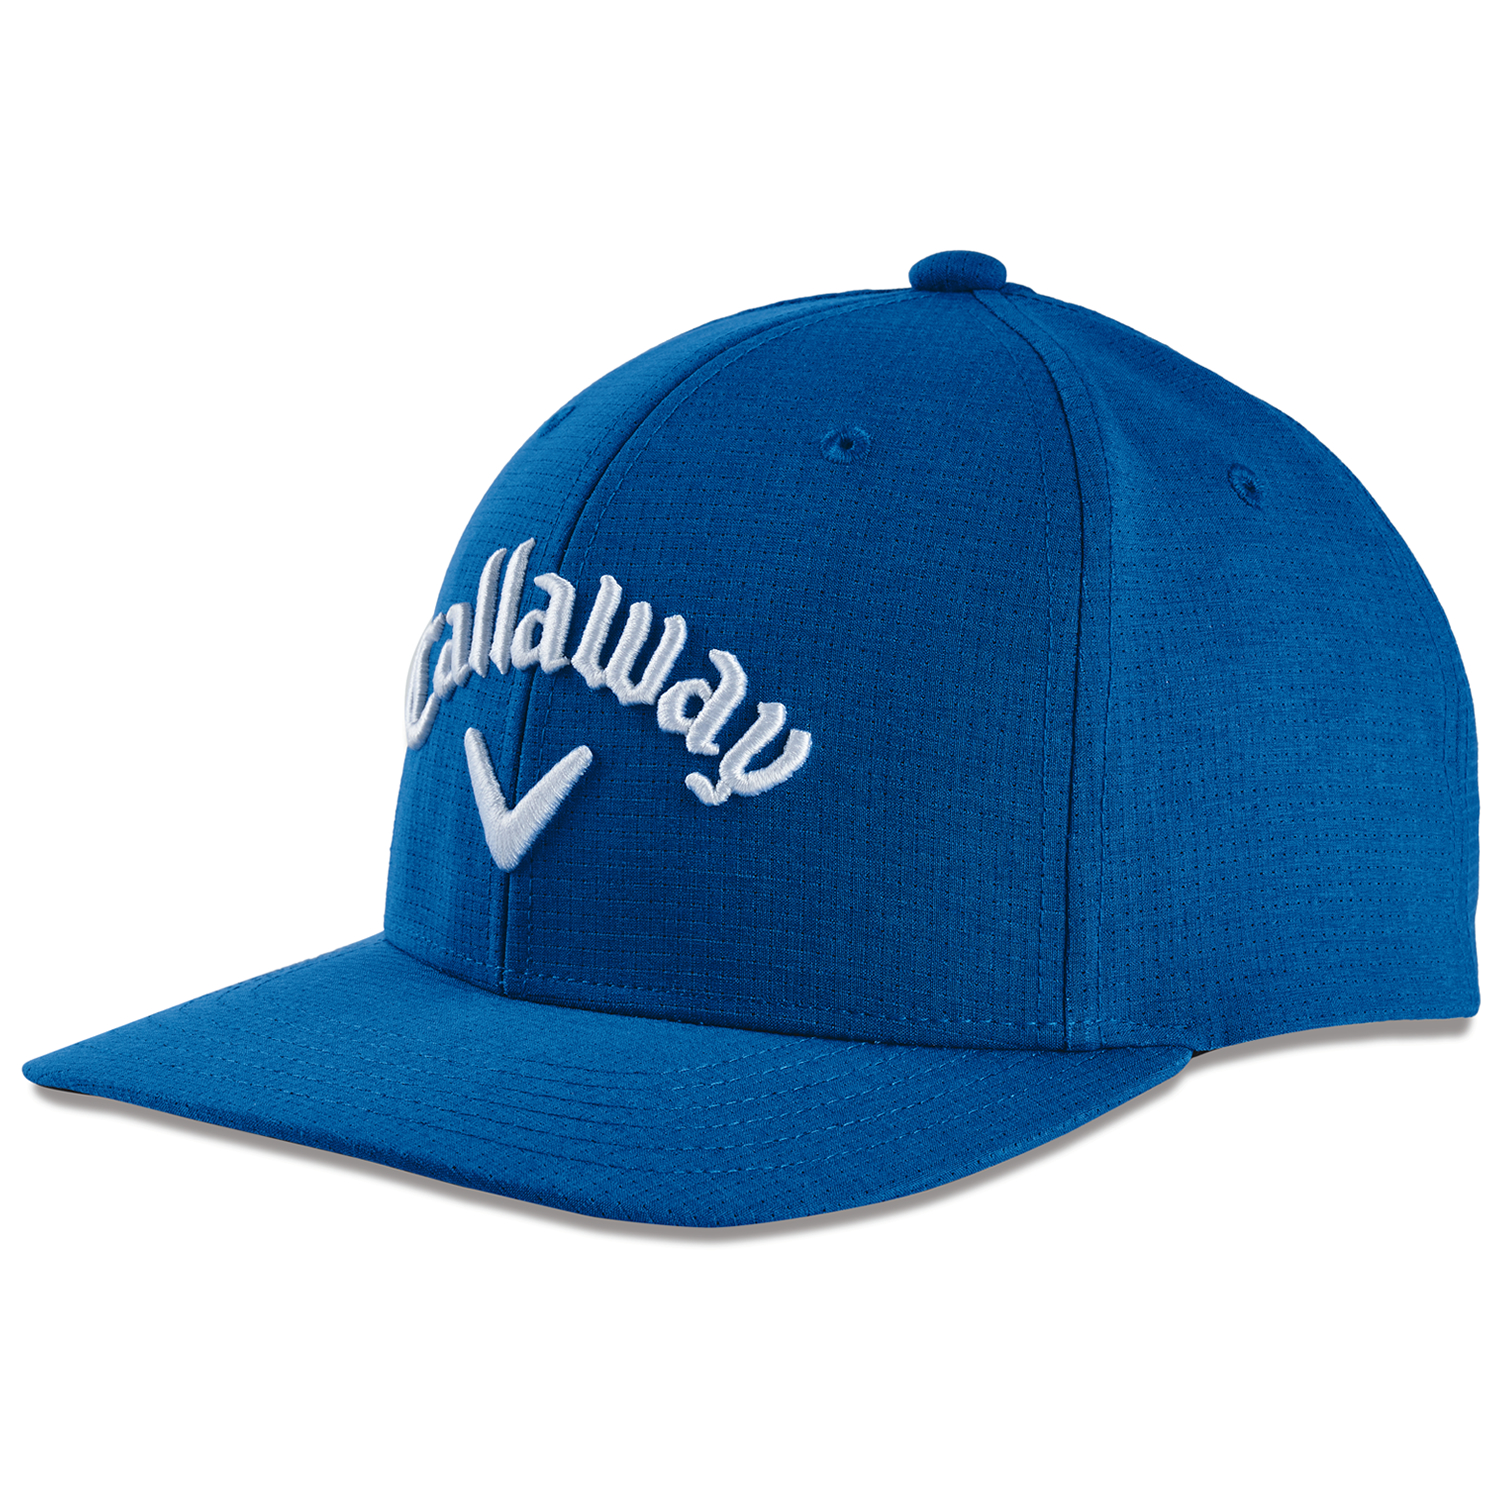 Callaway Tour Authentic Performance Pro (No Logo) Adjustable Baseball Cap